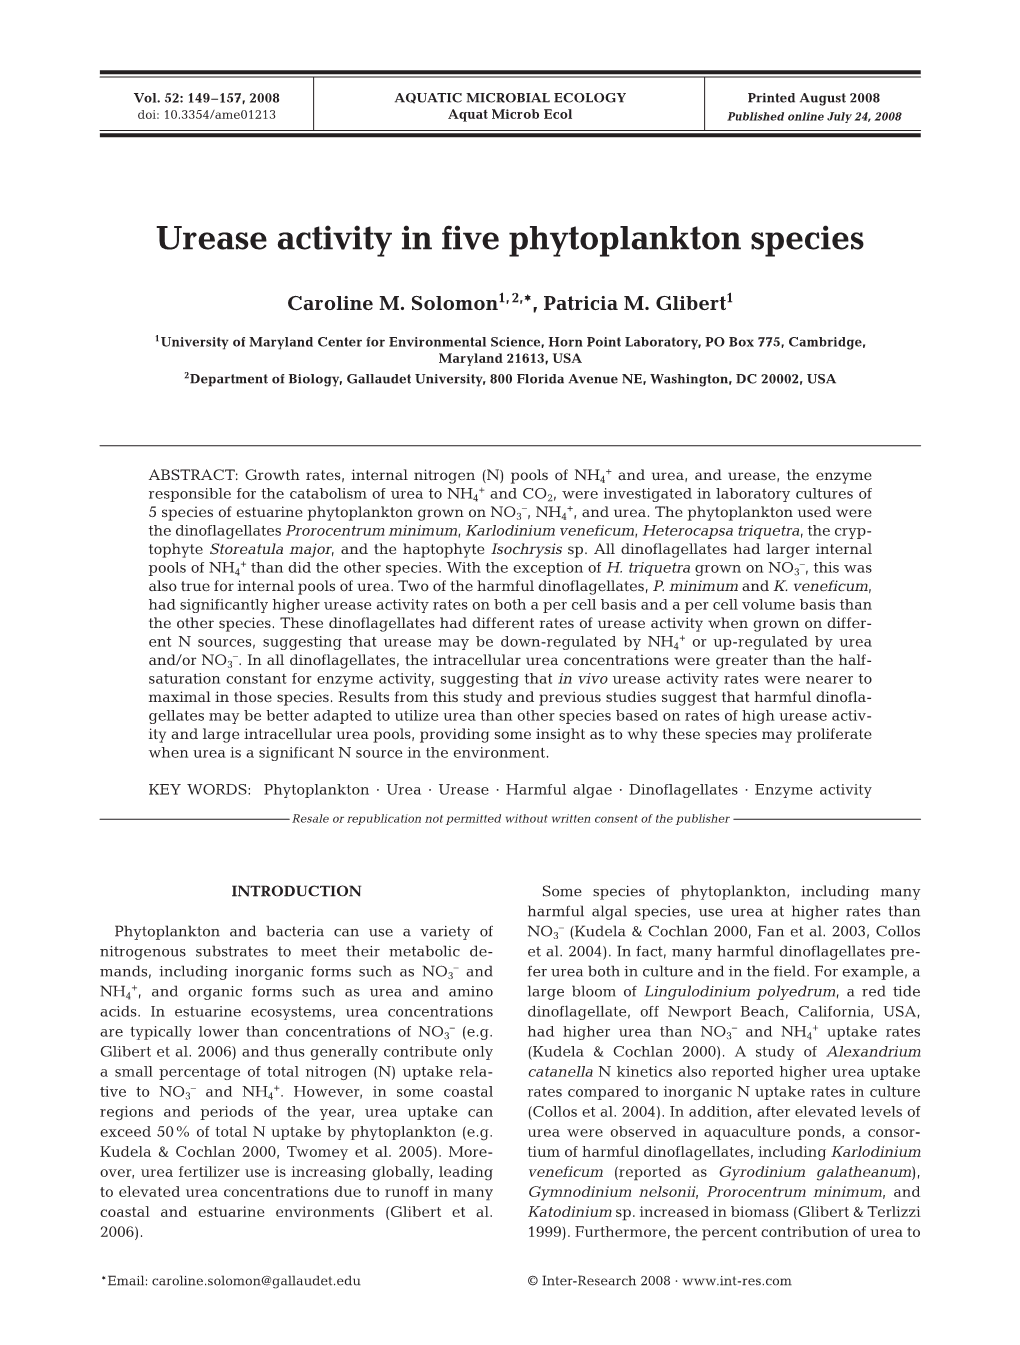 Urease Activity in Five Phytoplankton Species